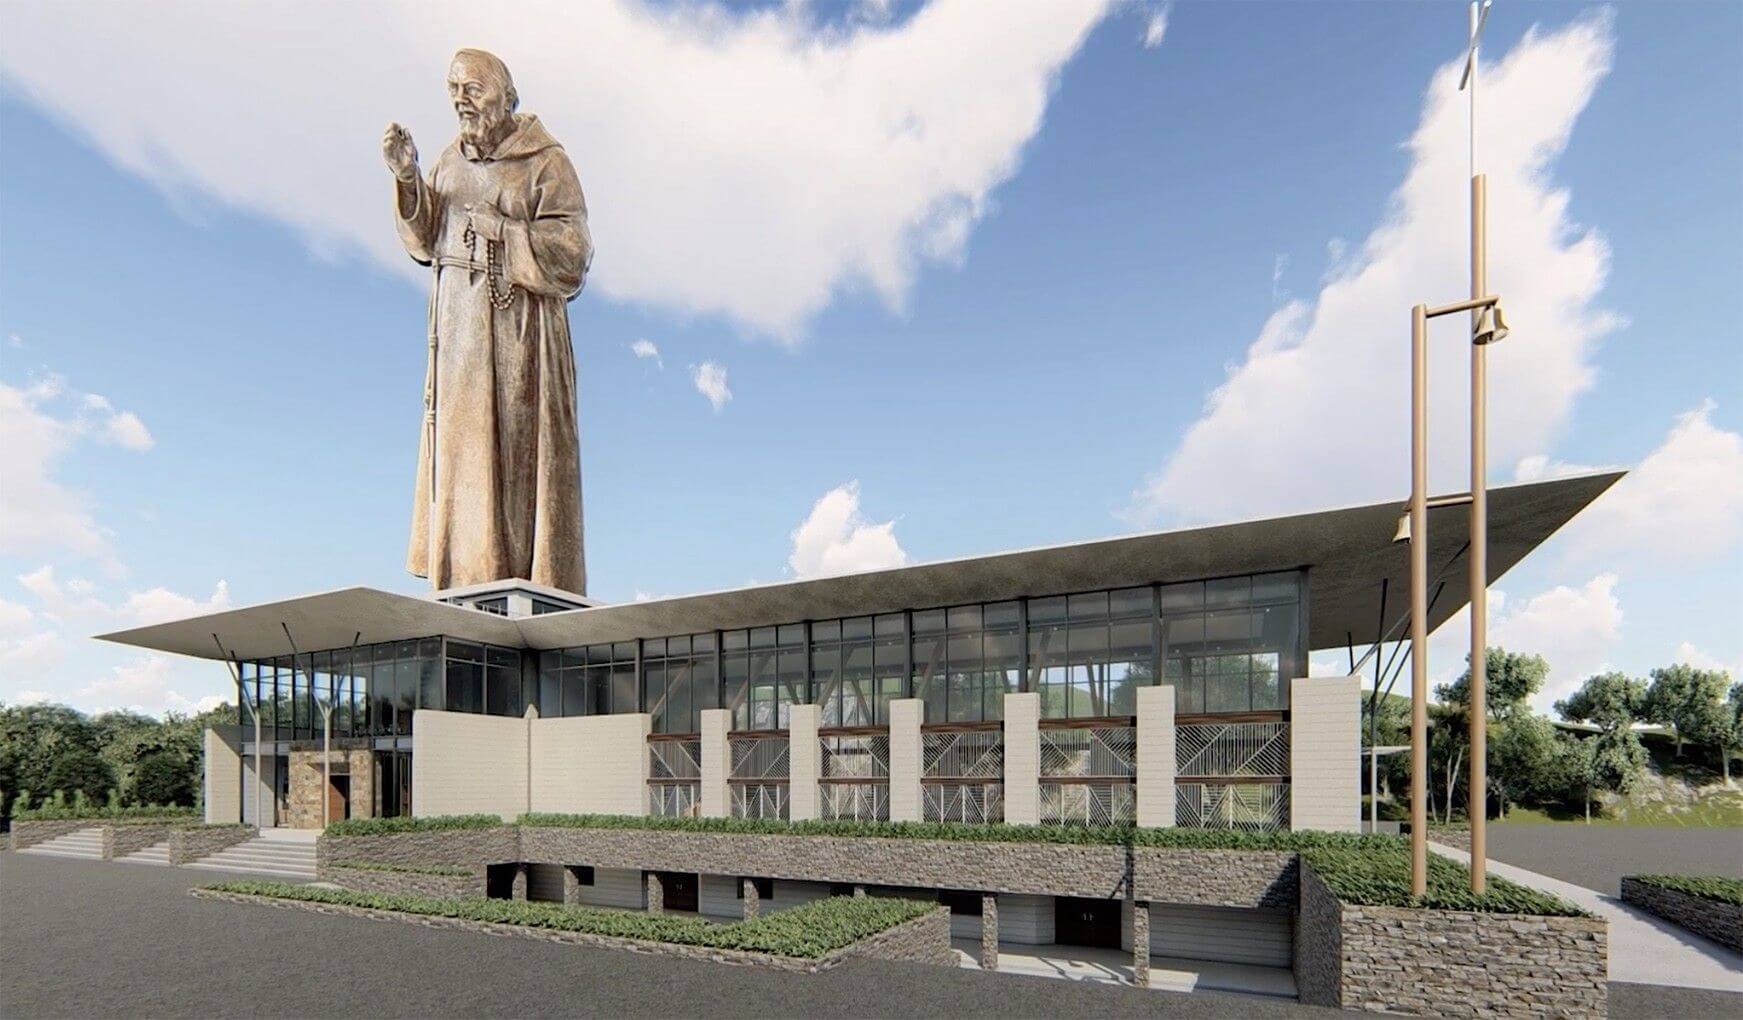 Padre-Pio-statue-cebu